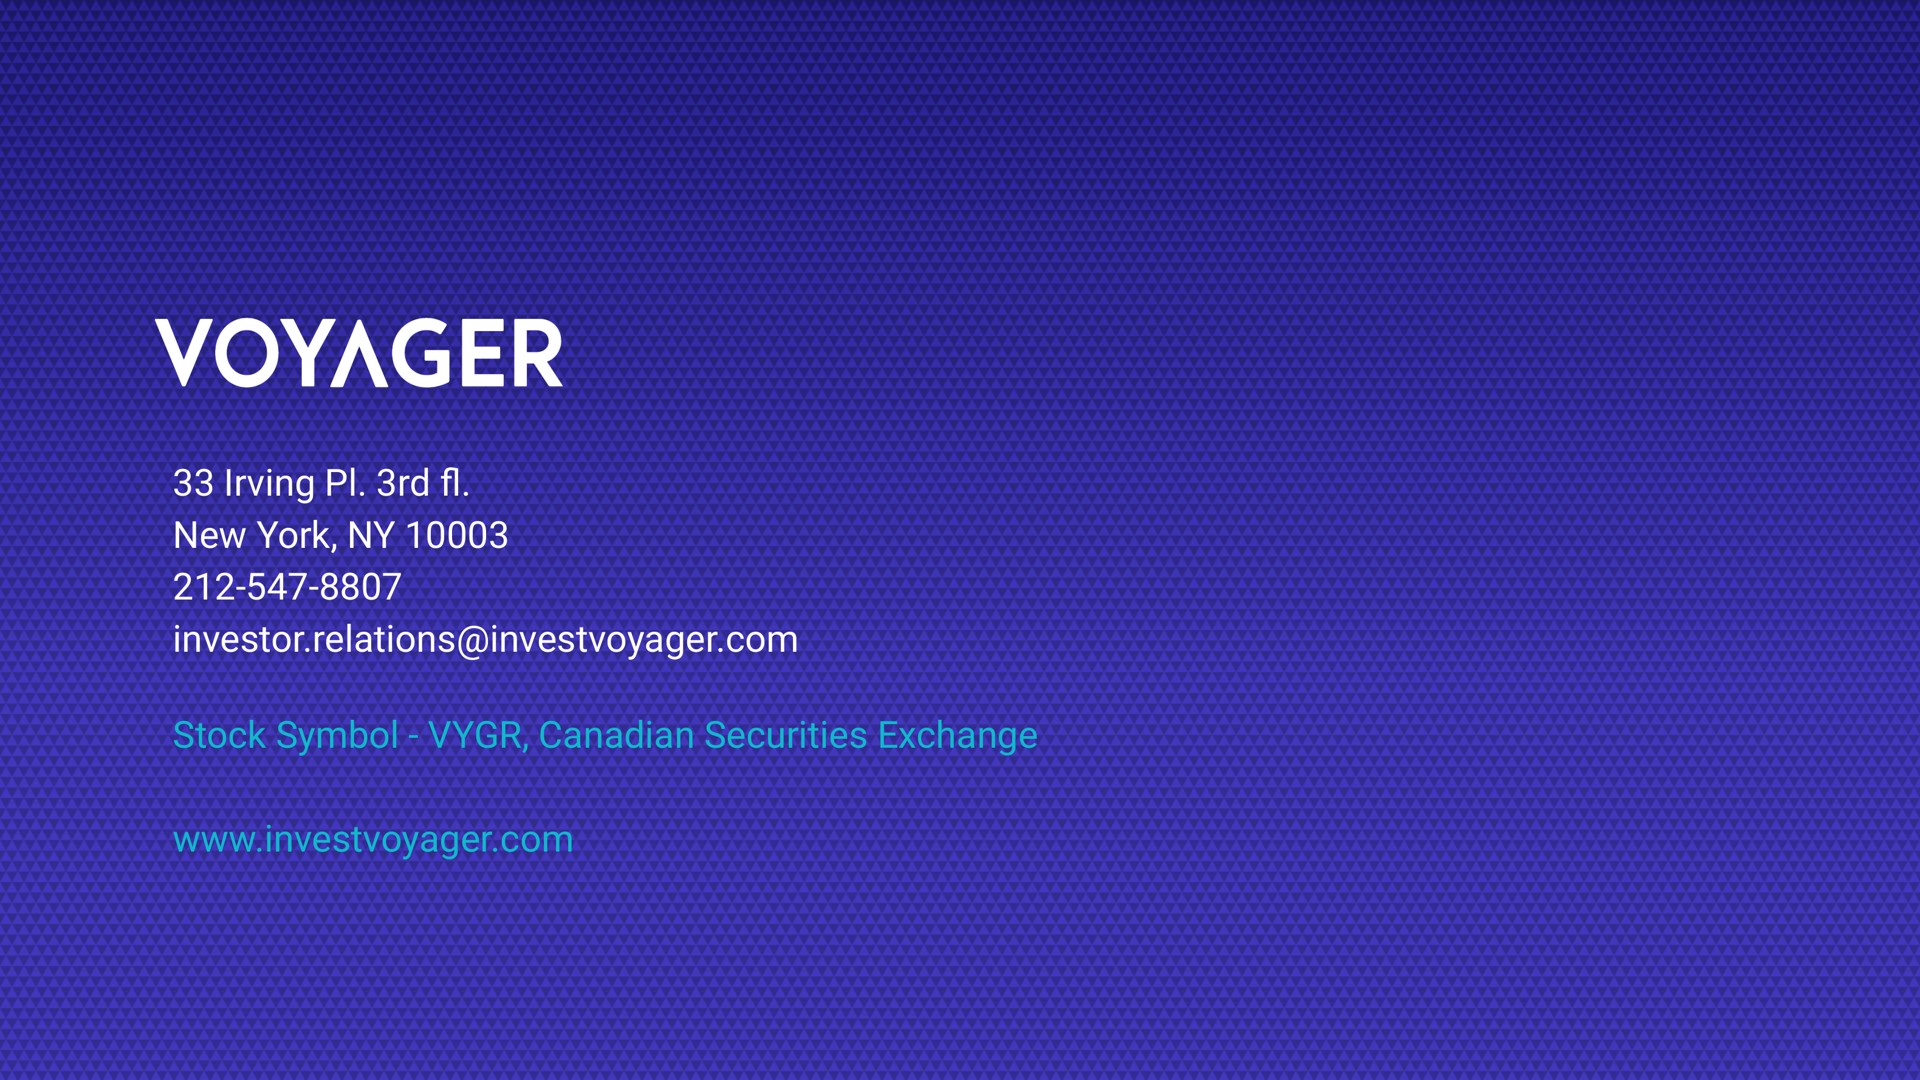 new york investor relations stock symbol securities exchange voyager digital con proprietary | Voyager Digital